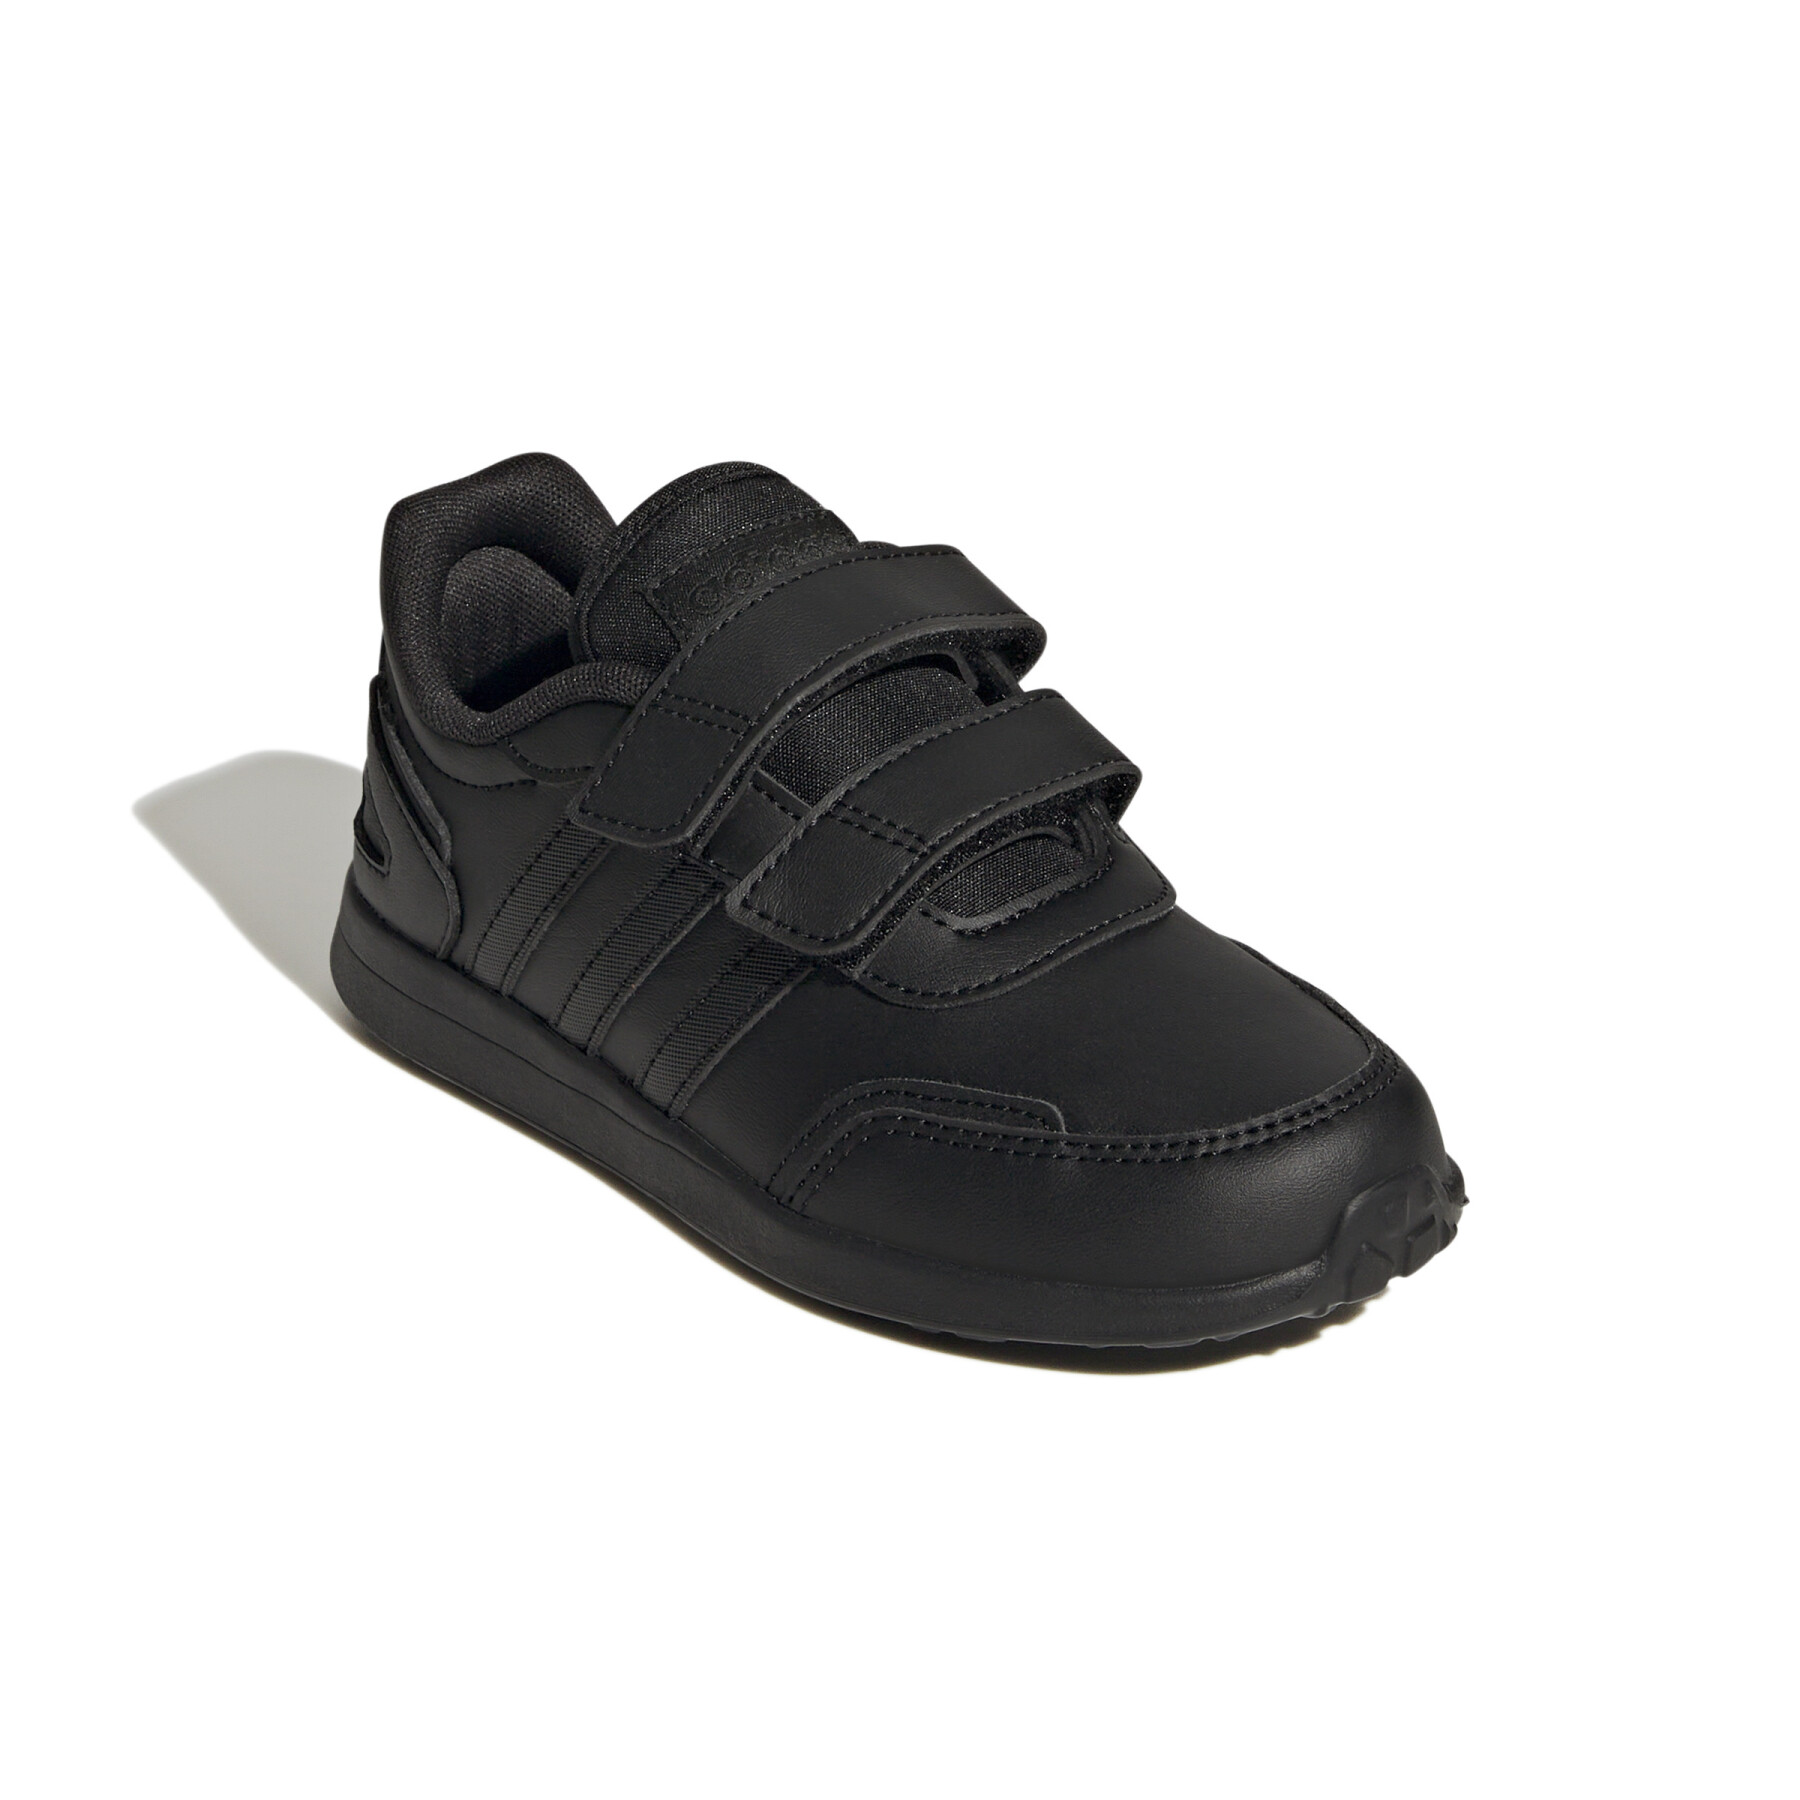 Children's sneakers adidas Vs Switch 3 C